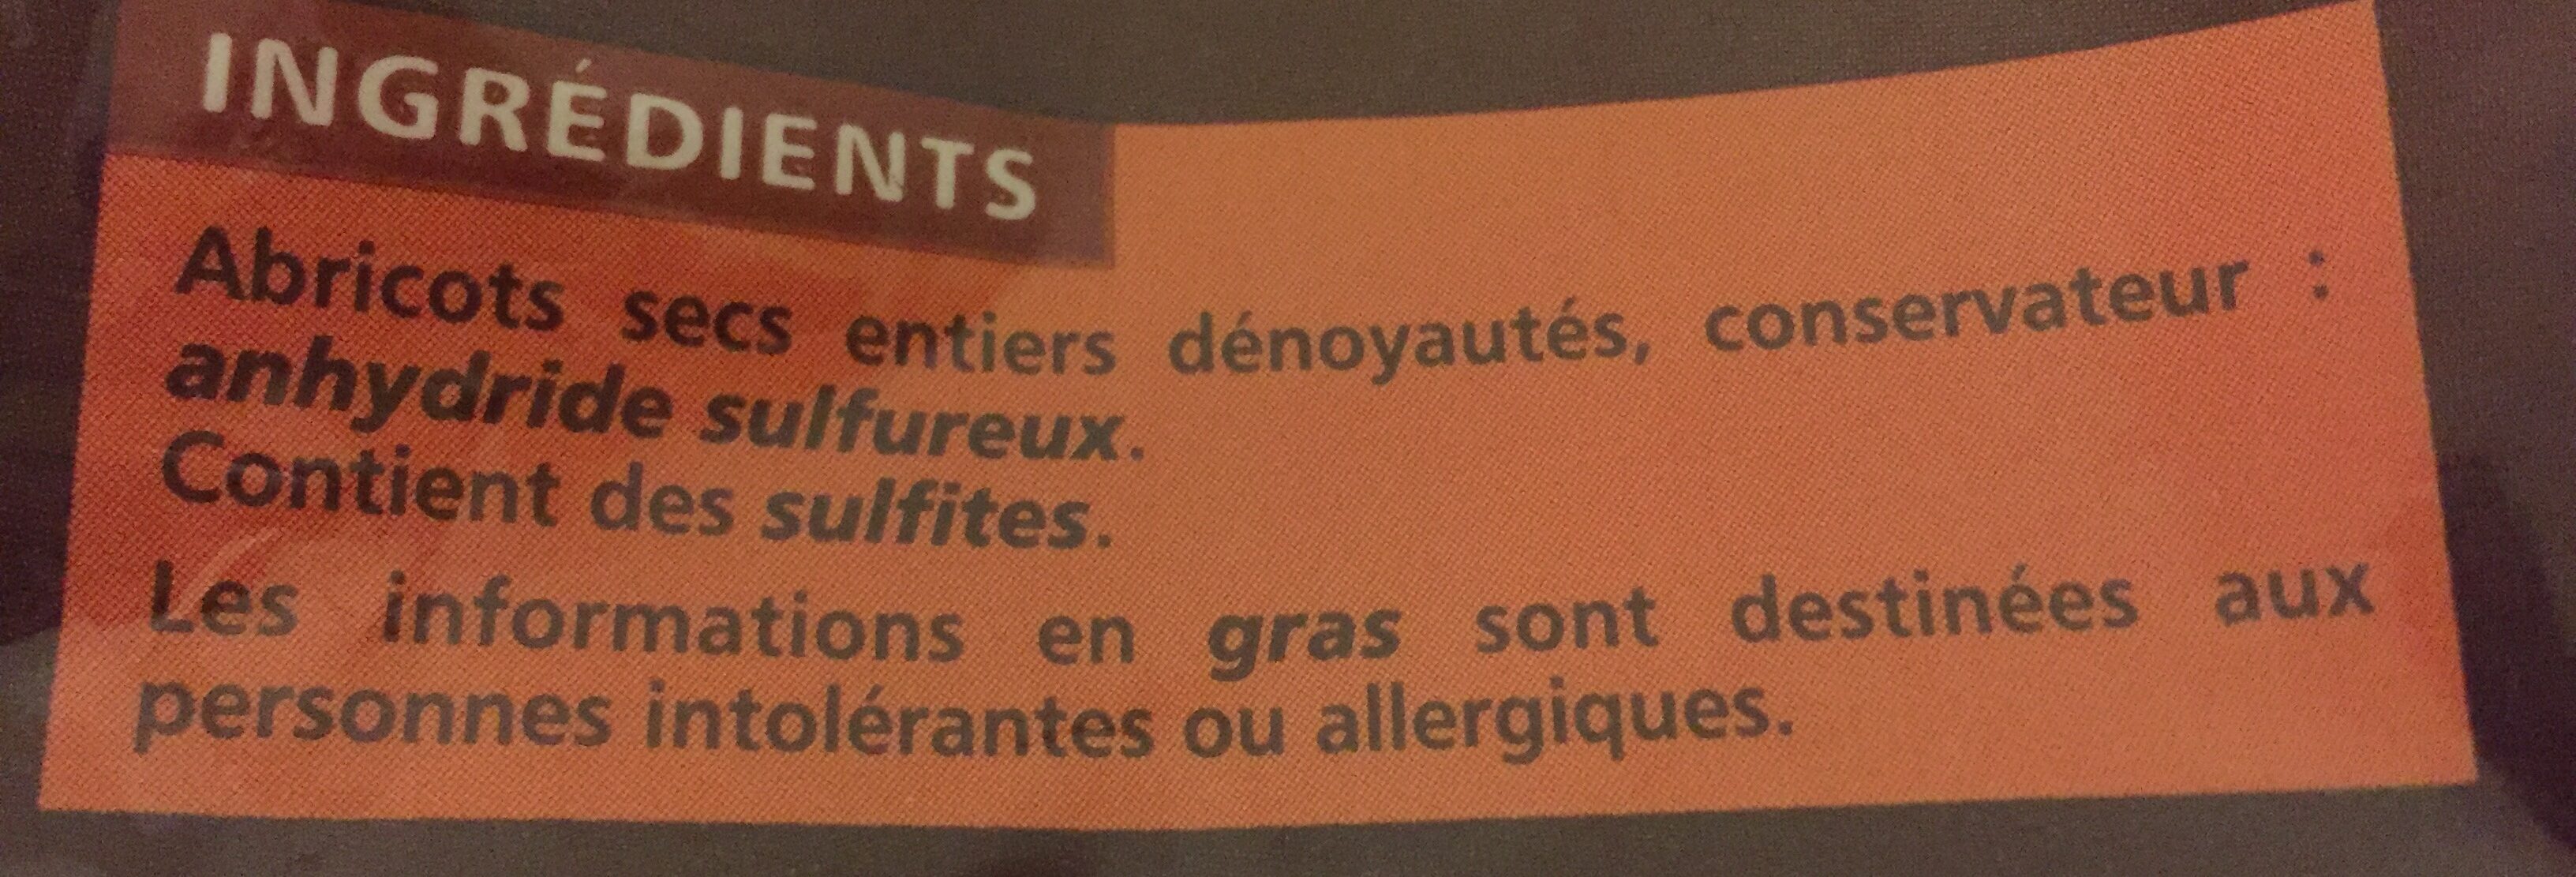 Abricots secs 250 g - Ingredients - fr